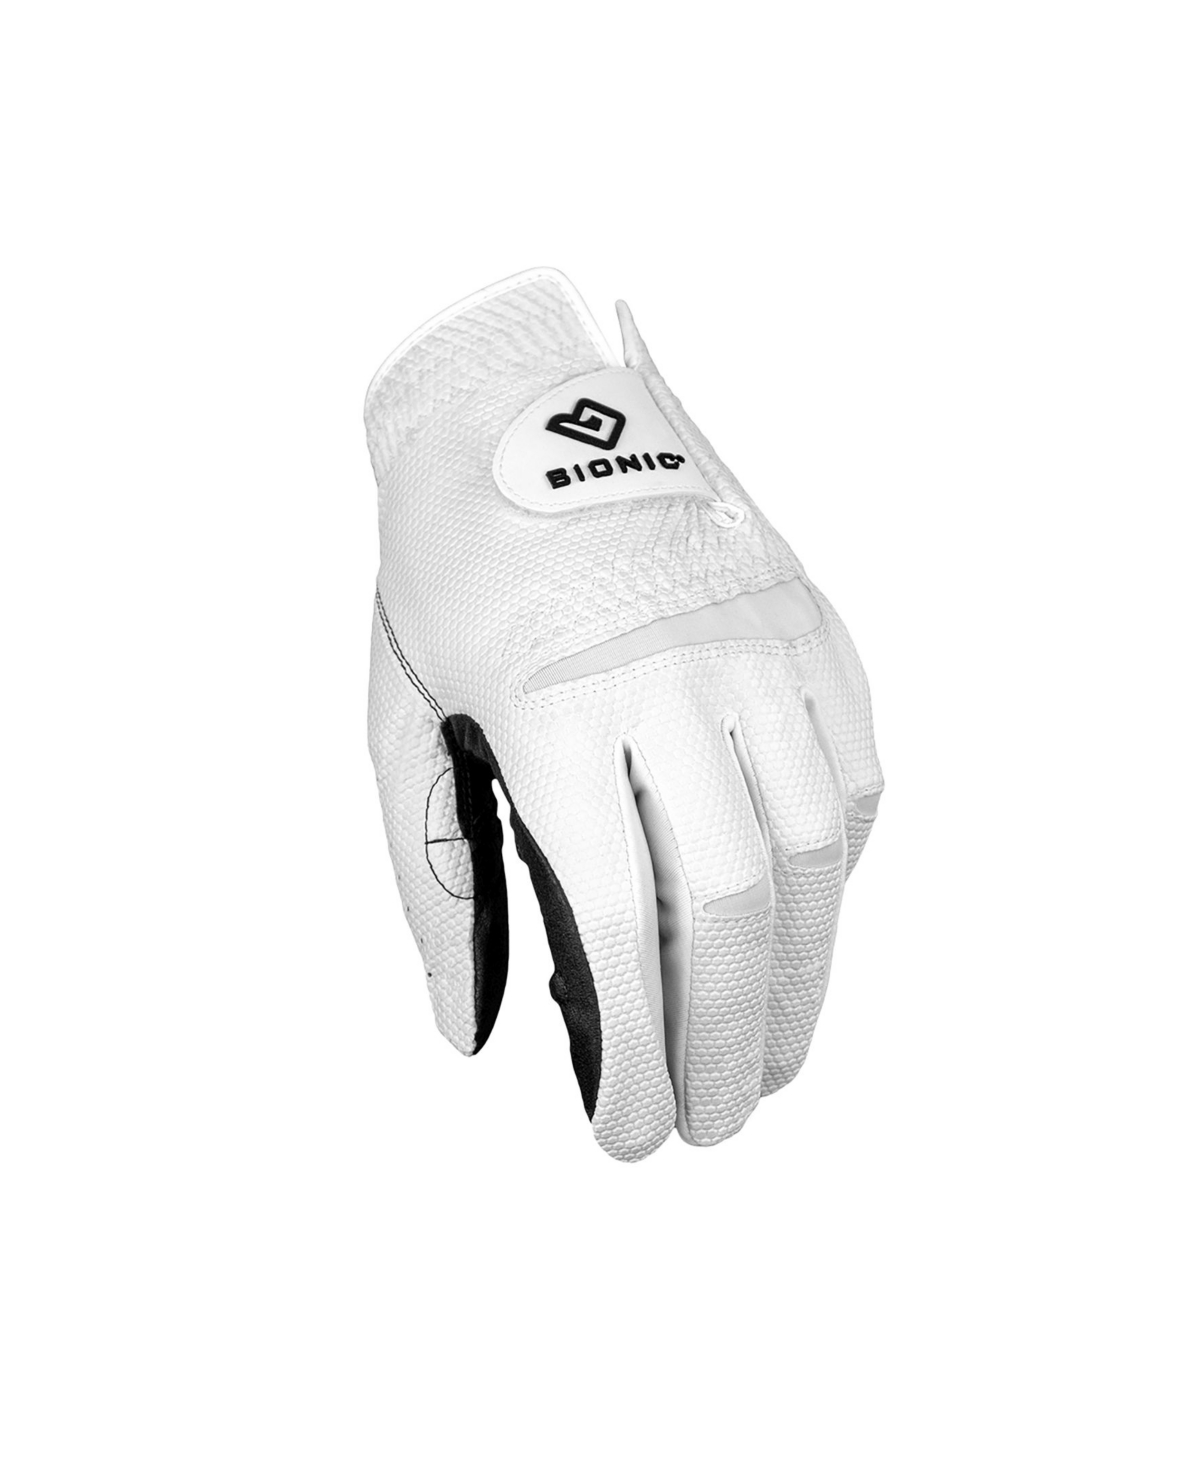 Men's Relax Grip 2.0 Golf Glove - Right Hand - White